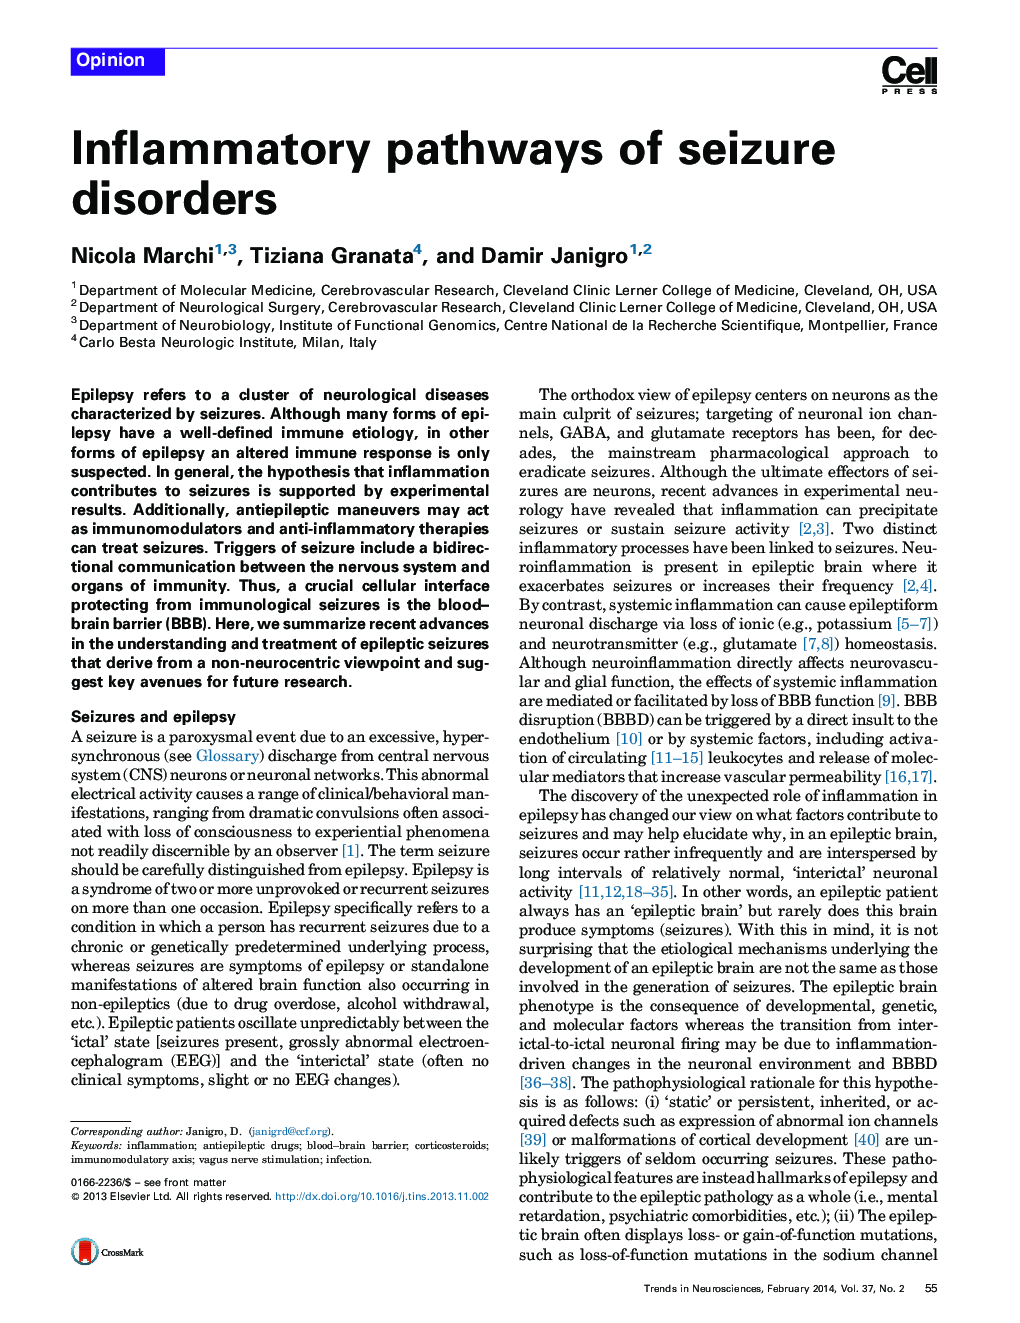 Inflammatory pathways of seizure disorders